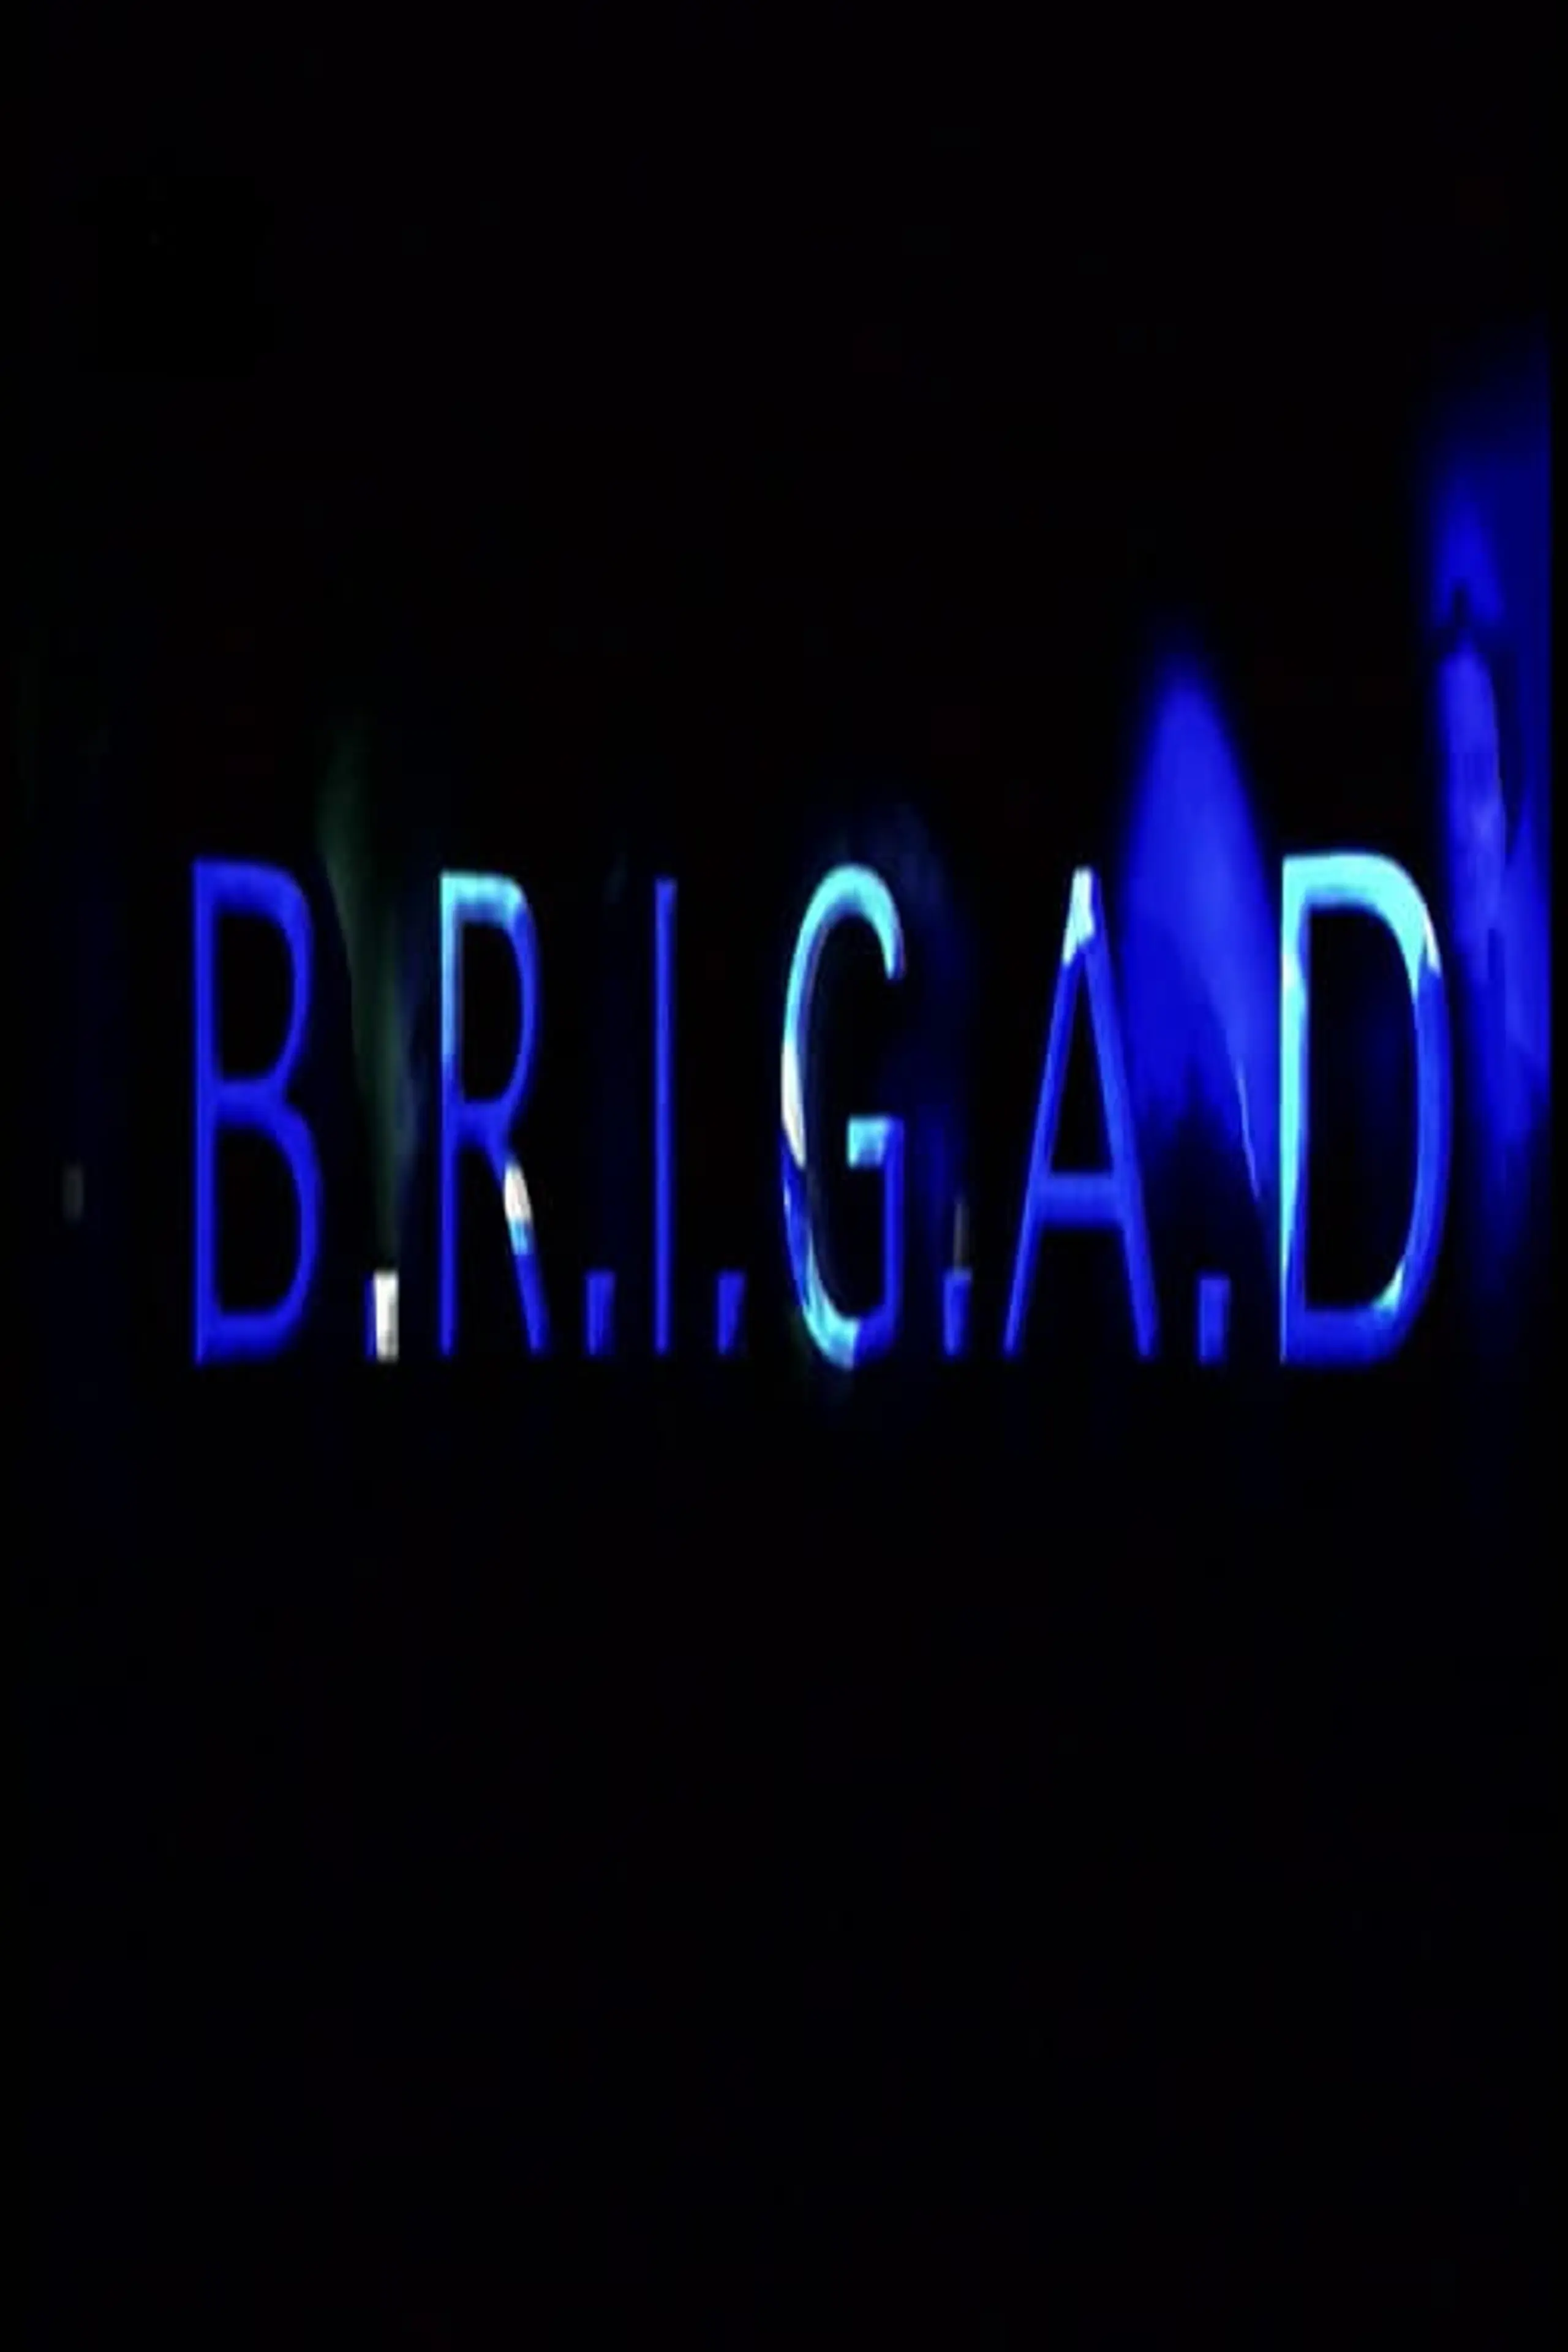 B.R.I.G.A.D.